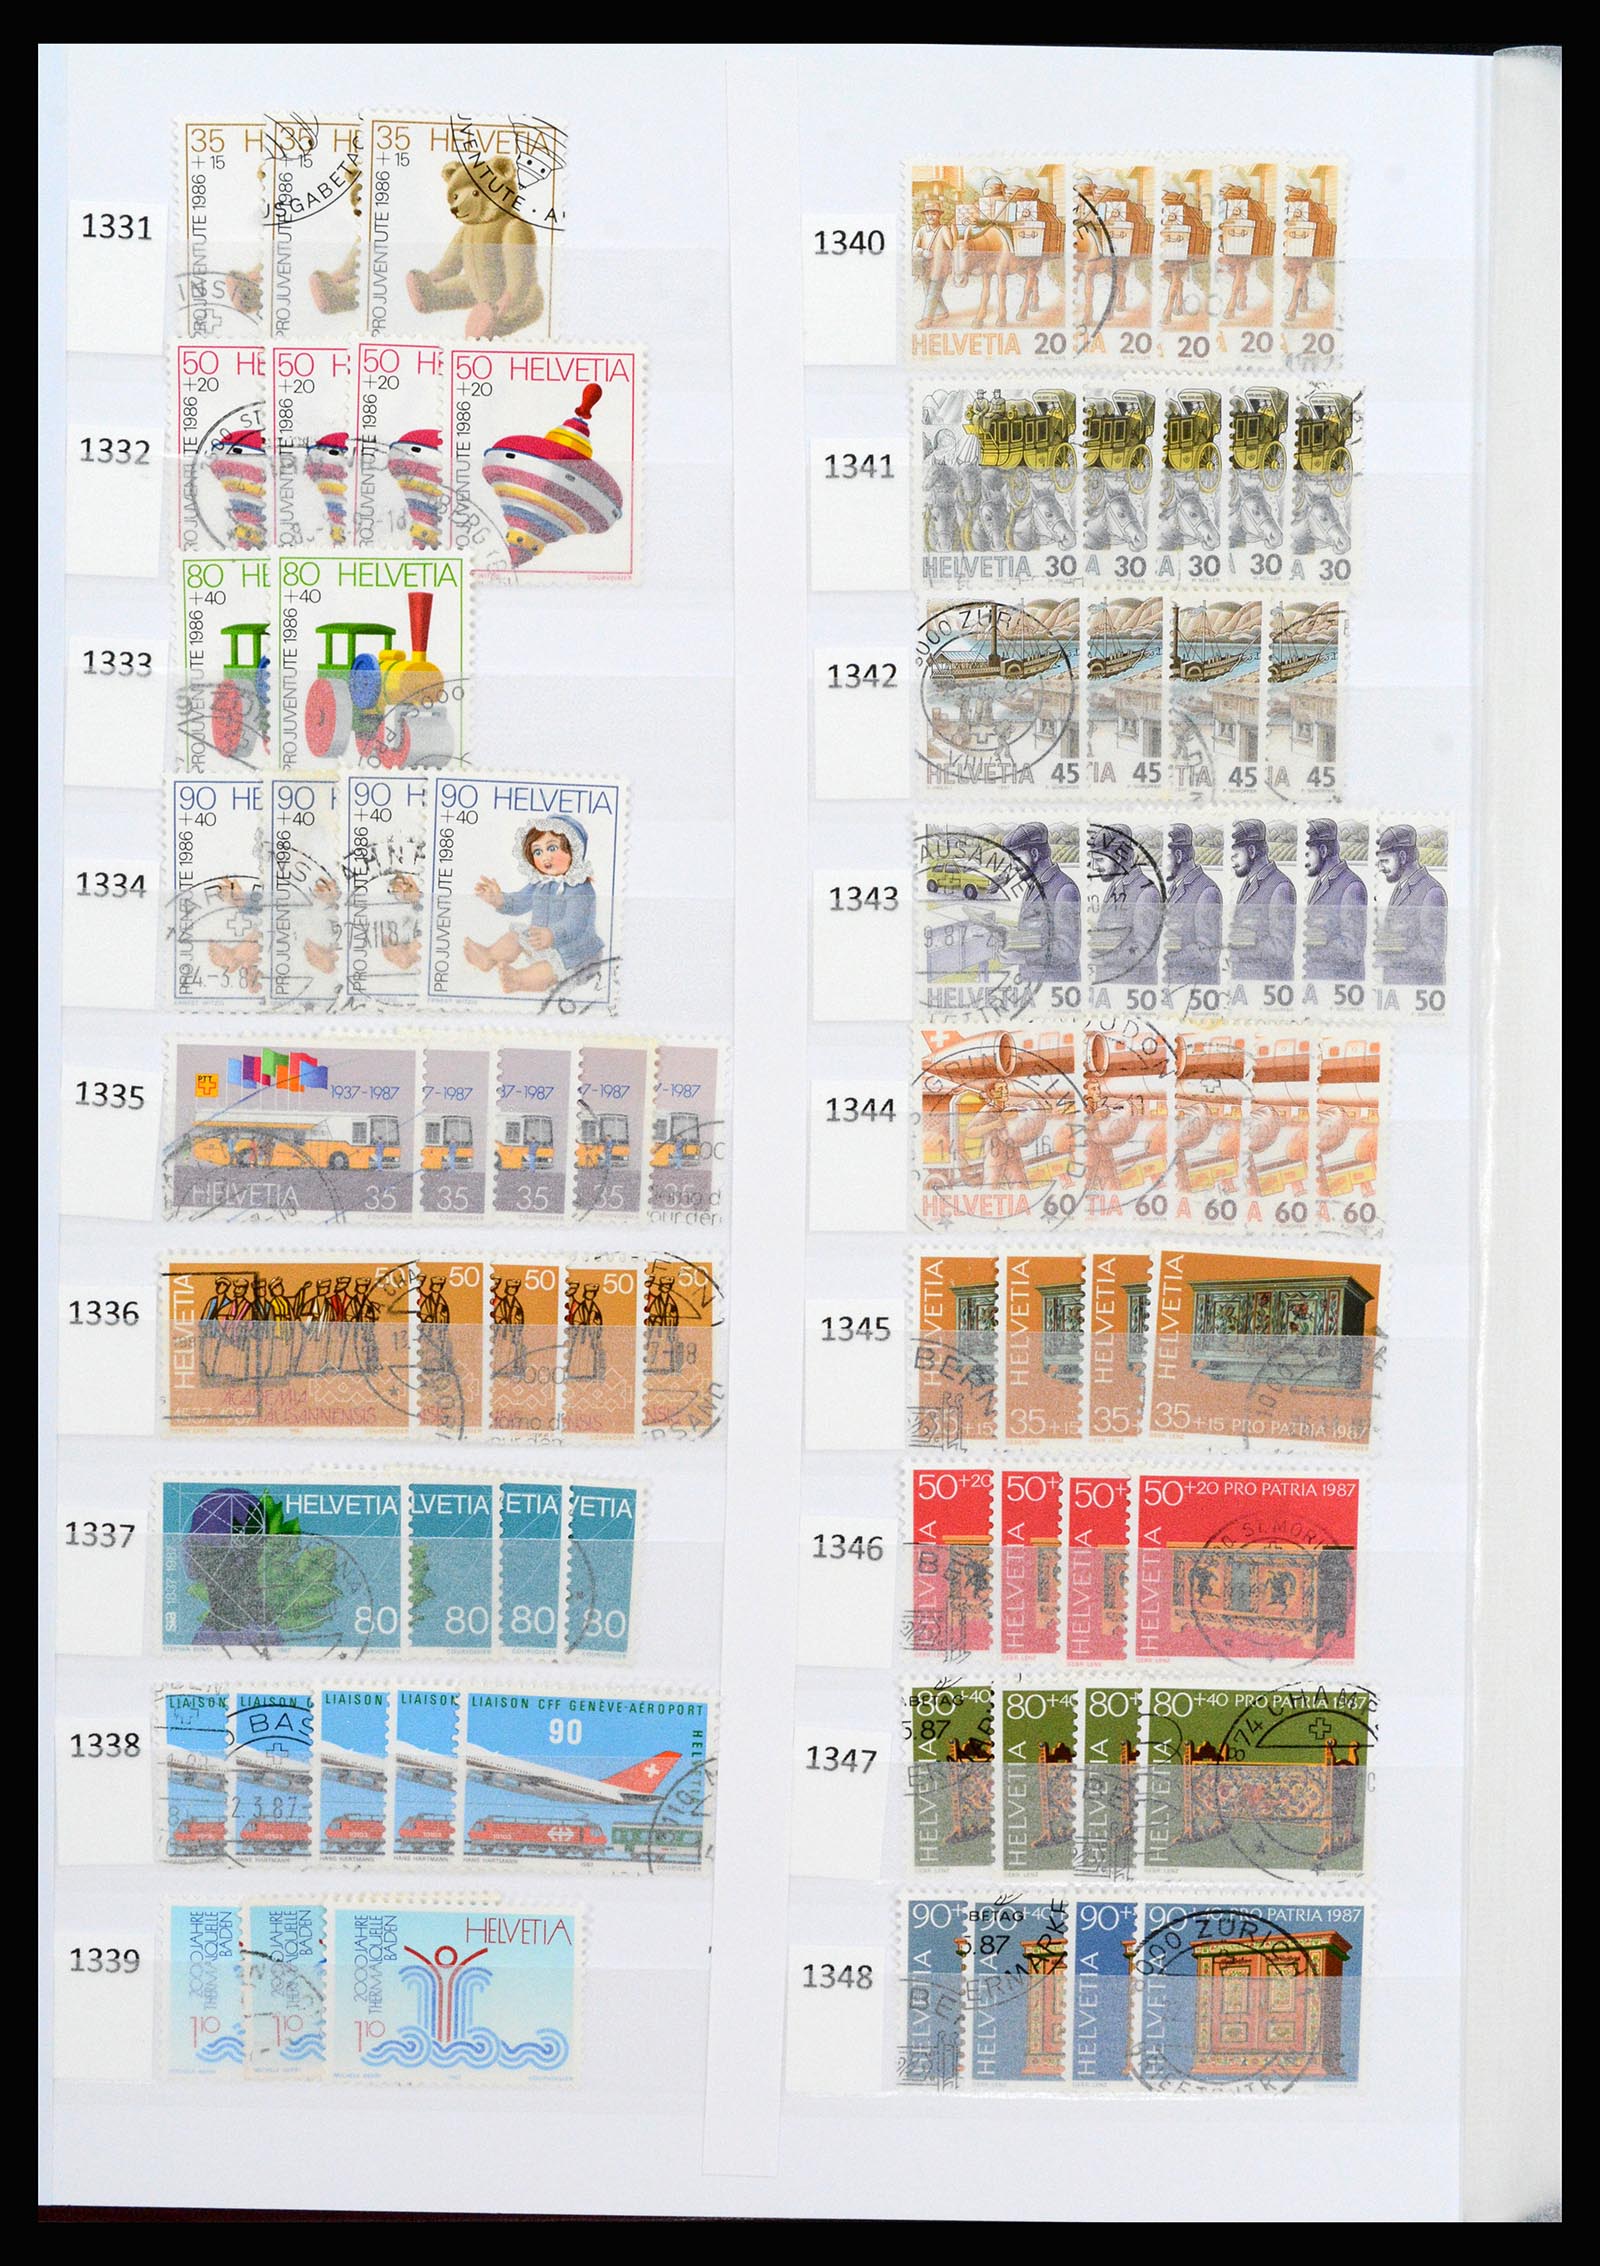 37252 075 - Stamp collection 37252 Switzerland 1900-2011.